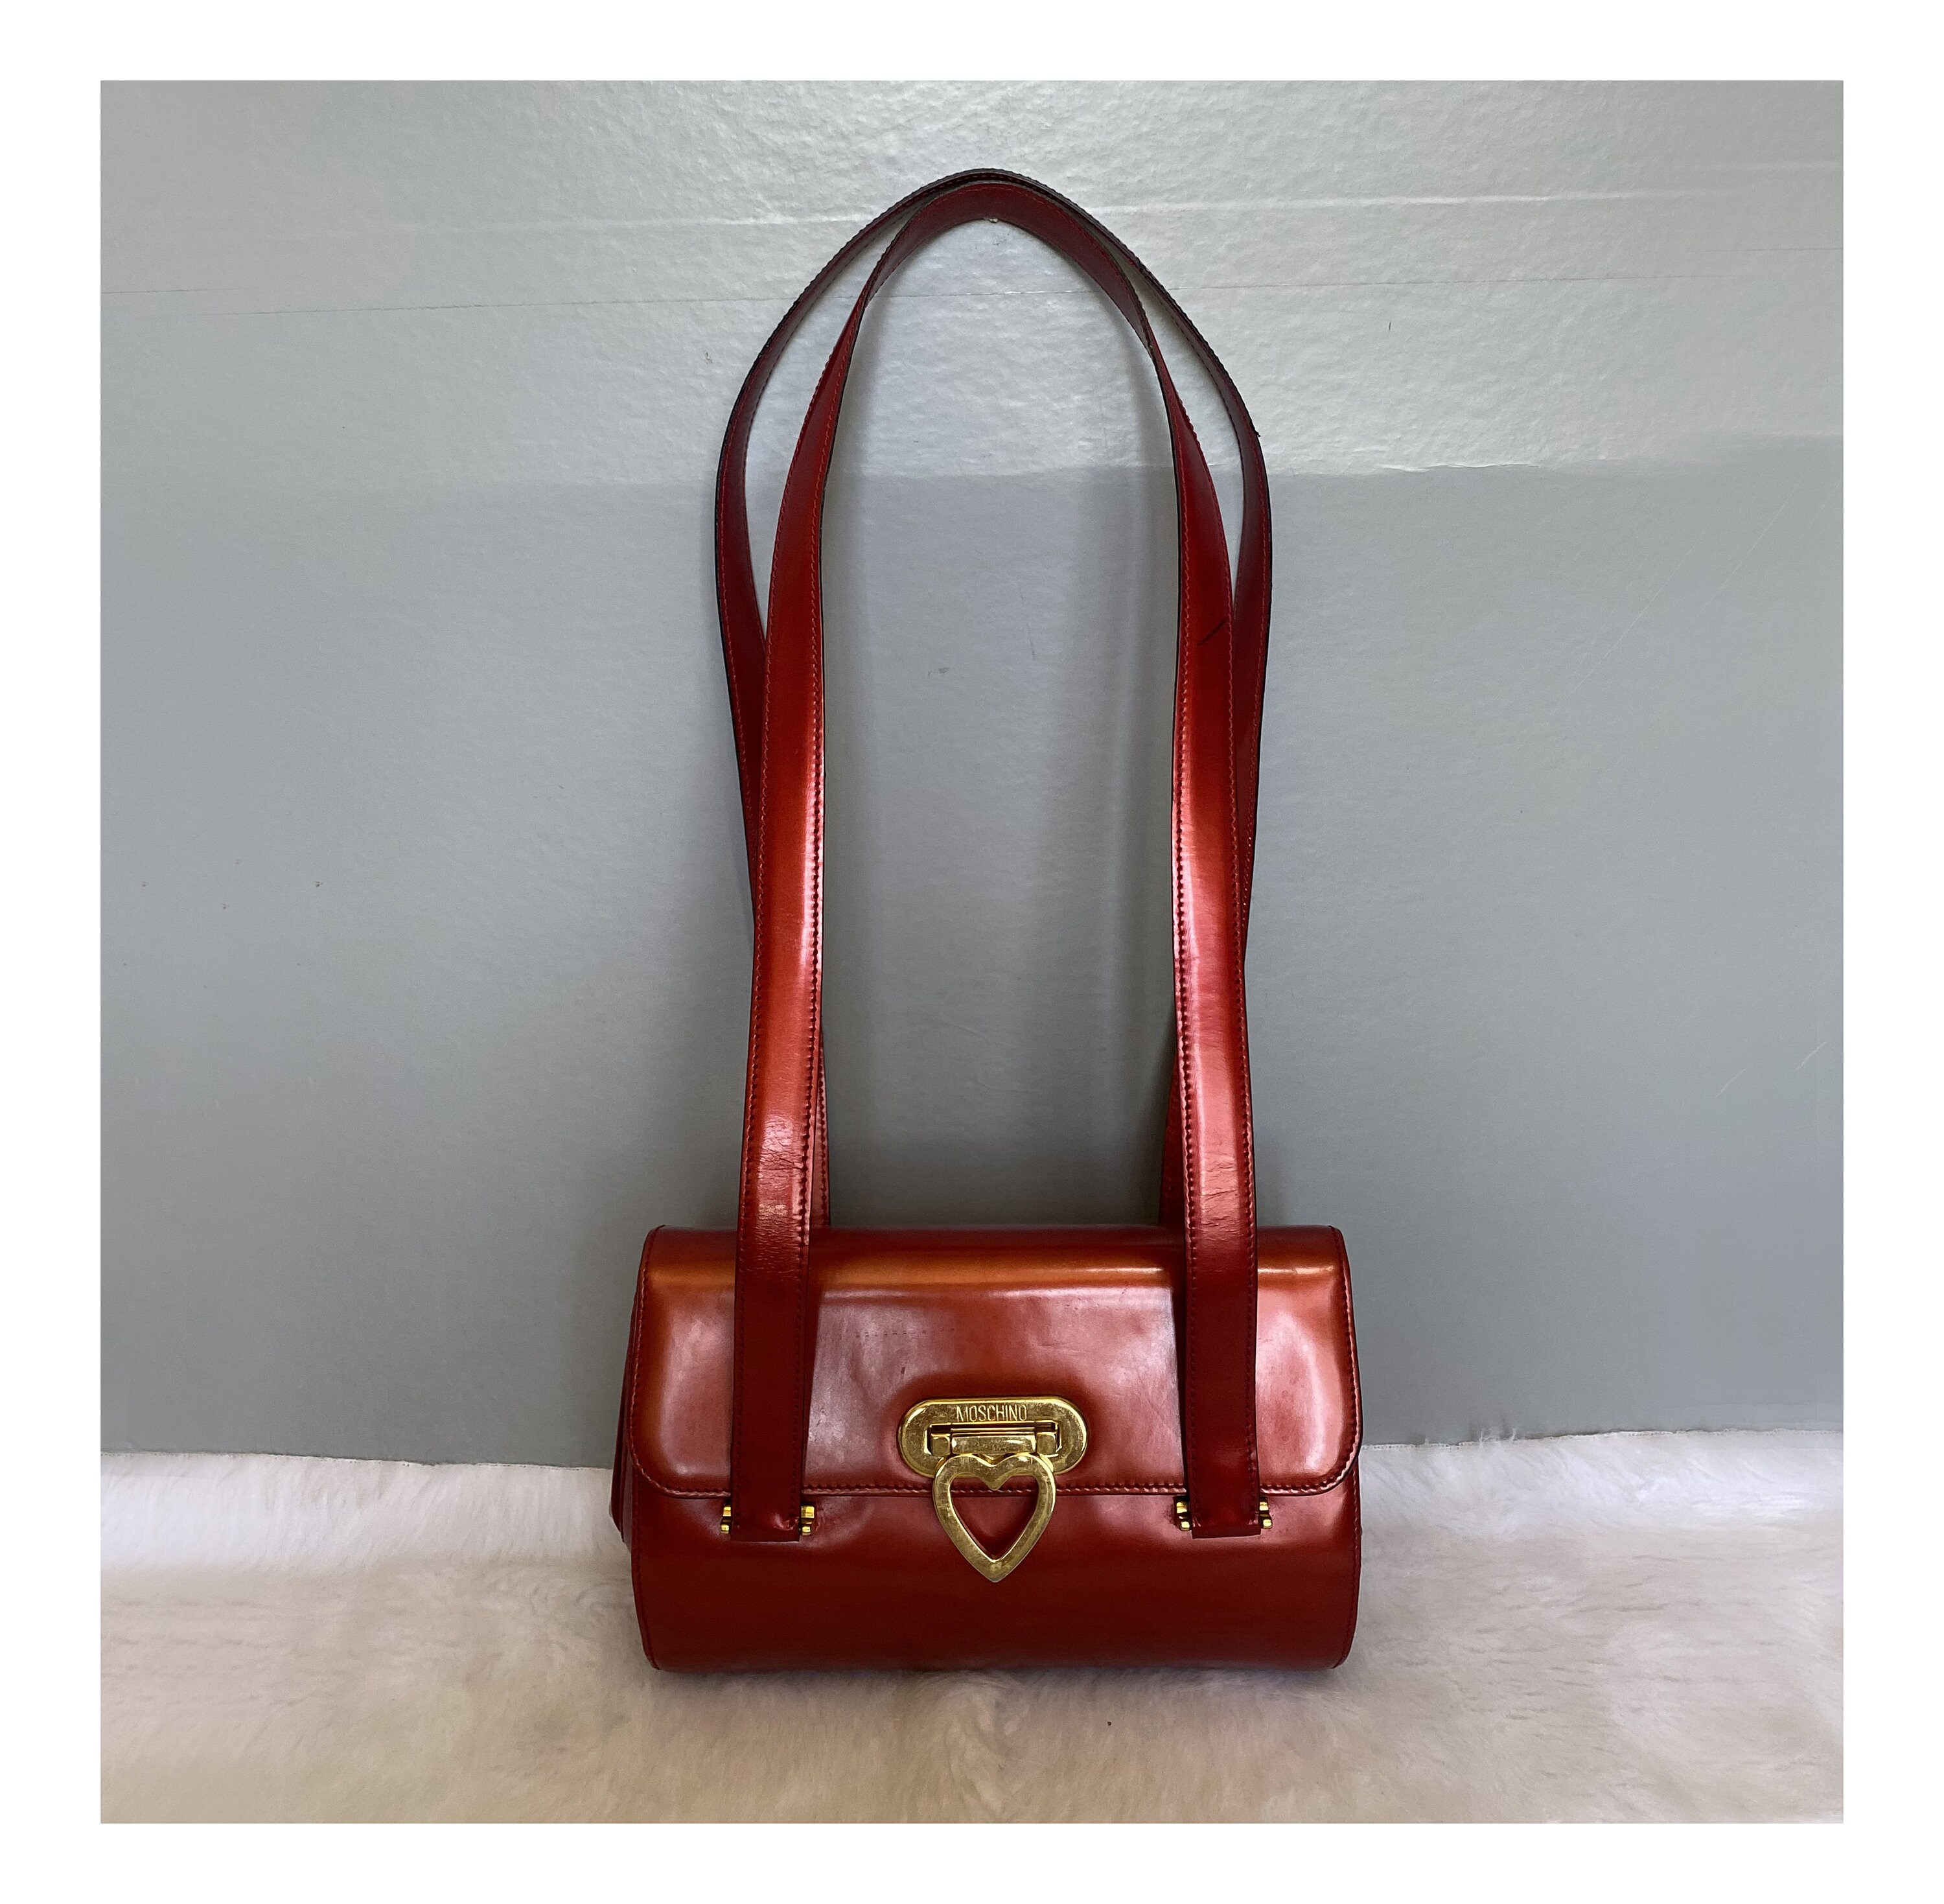 Vintage Bag Red Patent Leather Women's Shoulder Bag Fashion Ladies